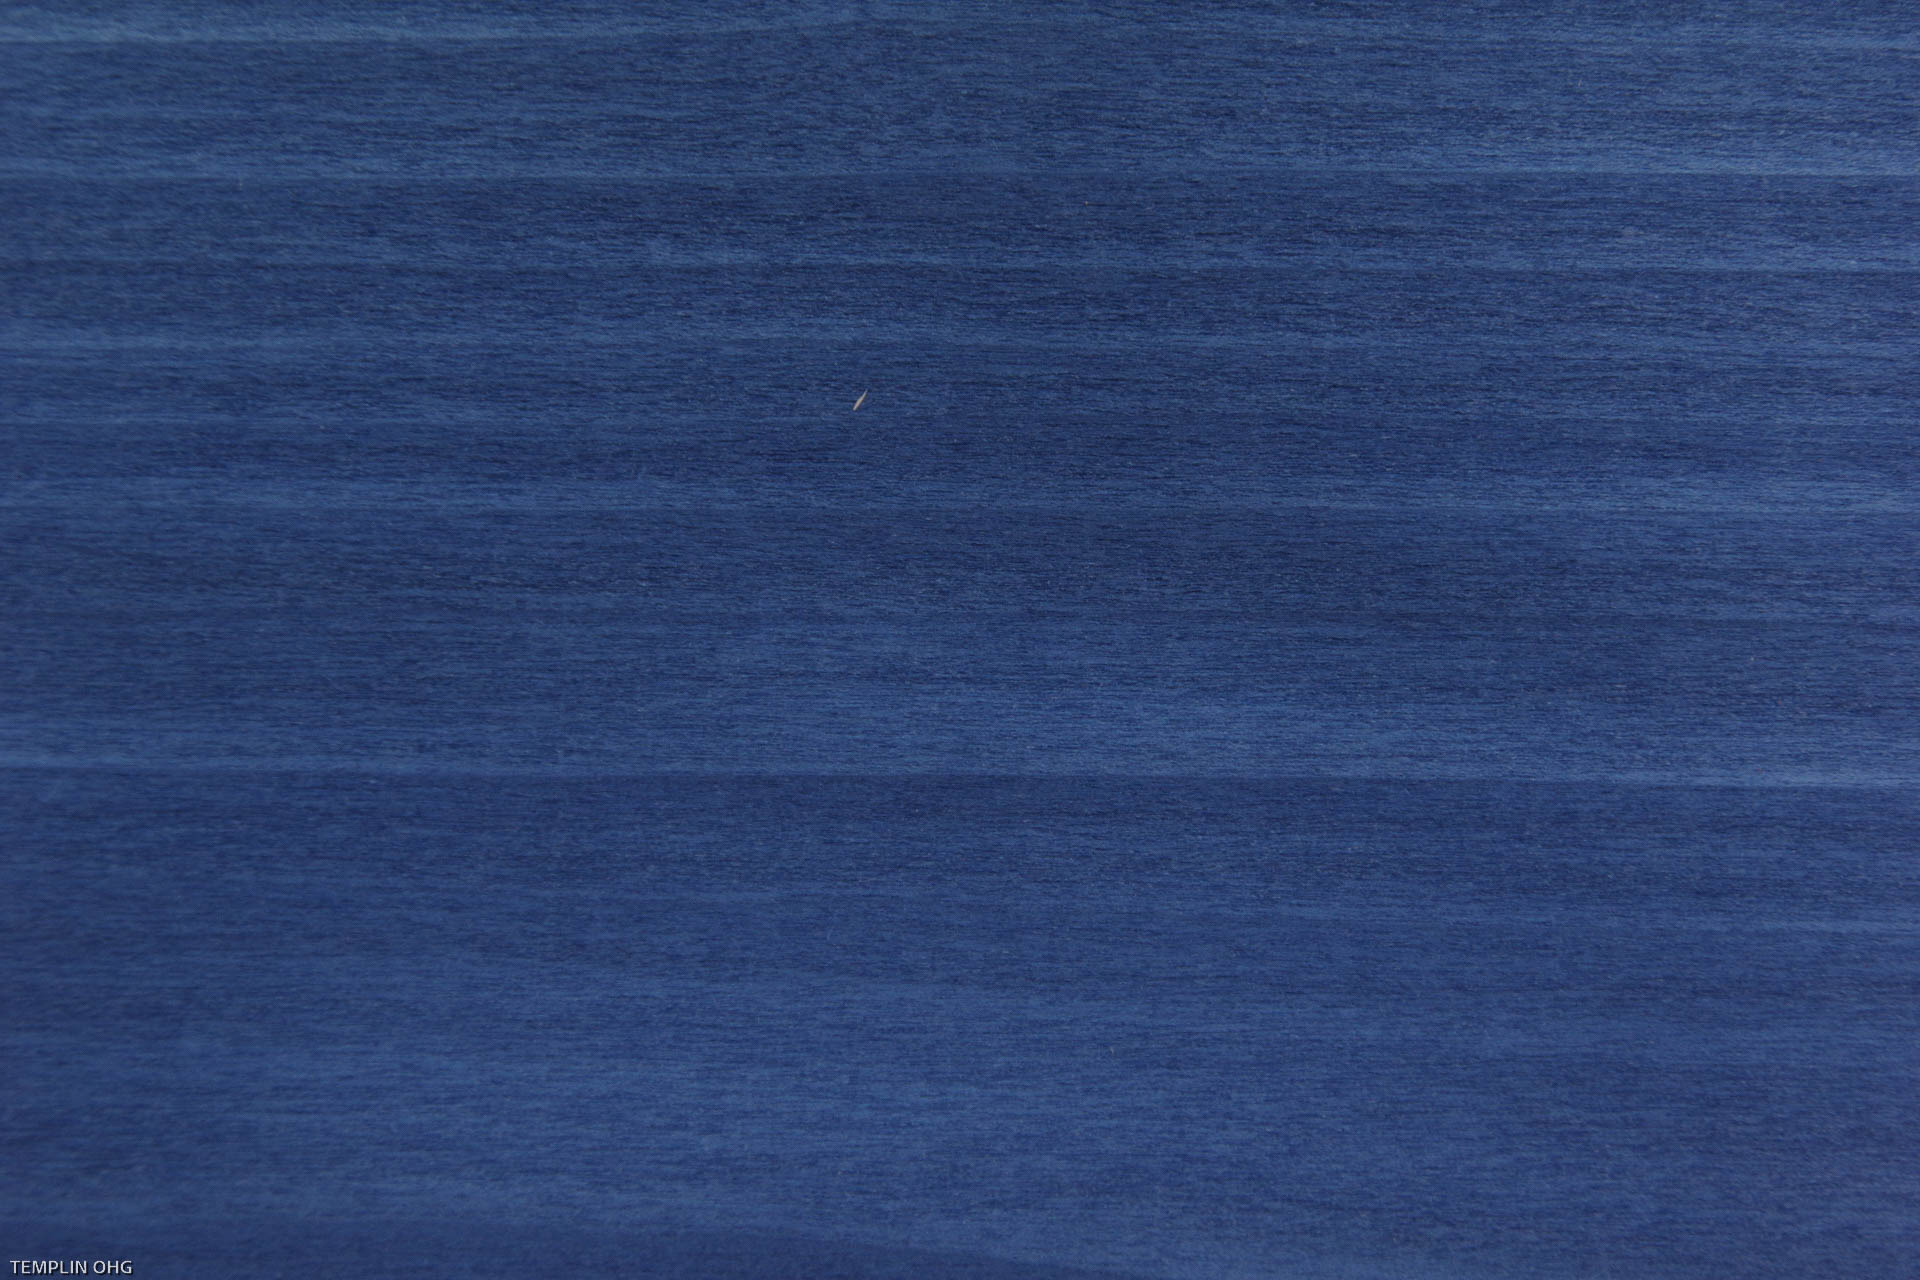 0,6mm Tulpenbaum blau gefärbtes Furnier 0,69m² B 6 105 11